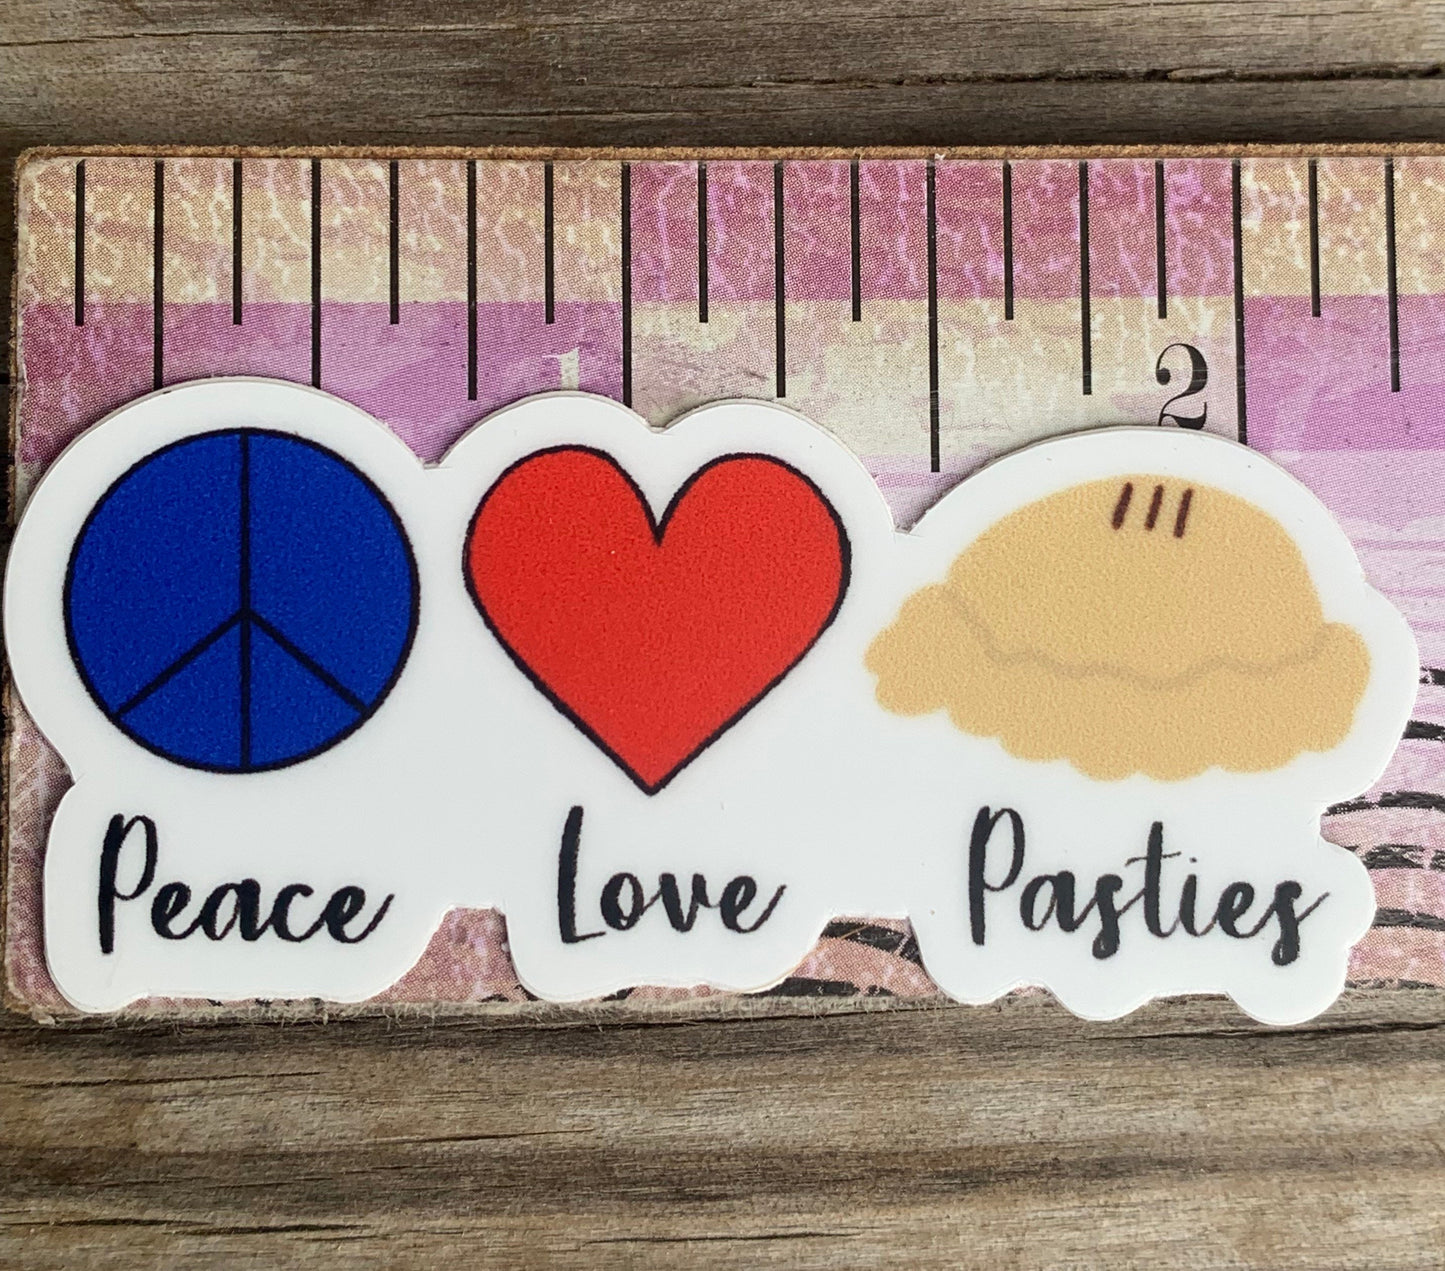 Peace Love & pasties sticker |  pasty |  sticker | yooper | UP | Upper Peninsula | Michigan | decal